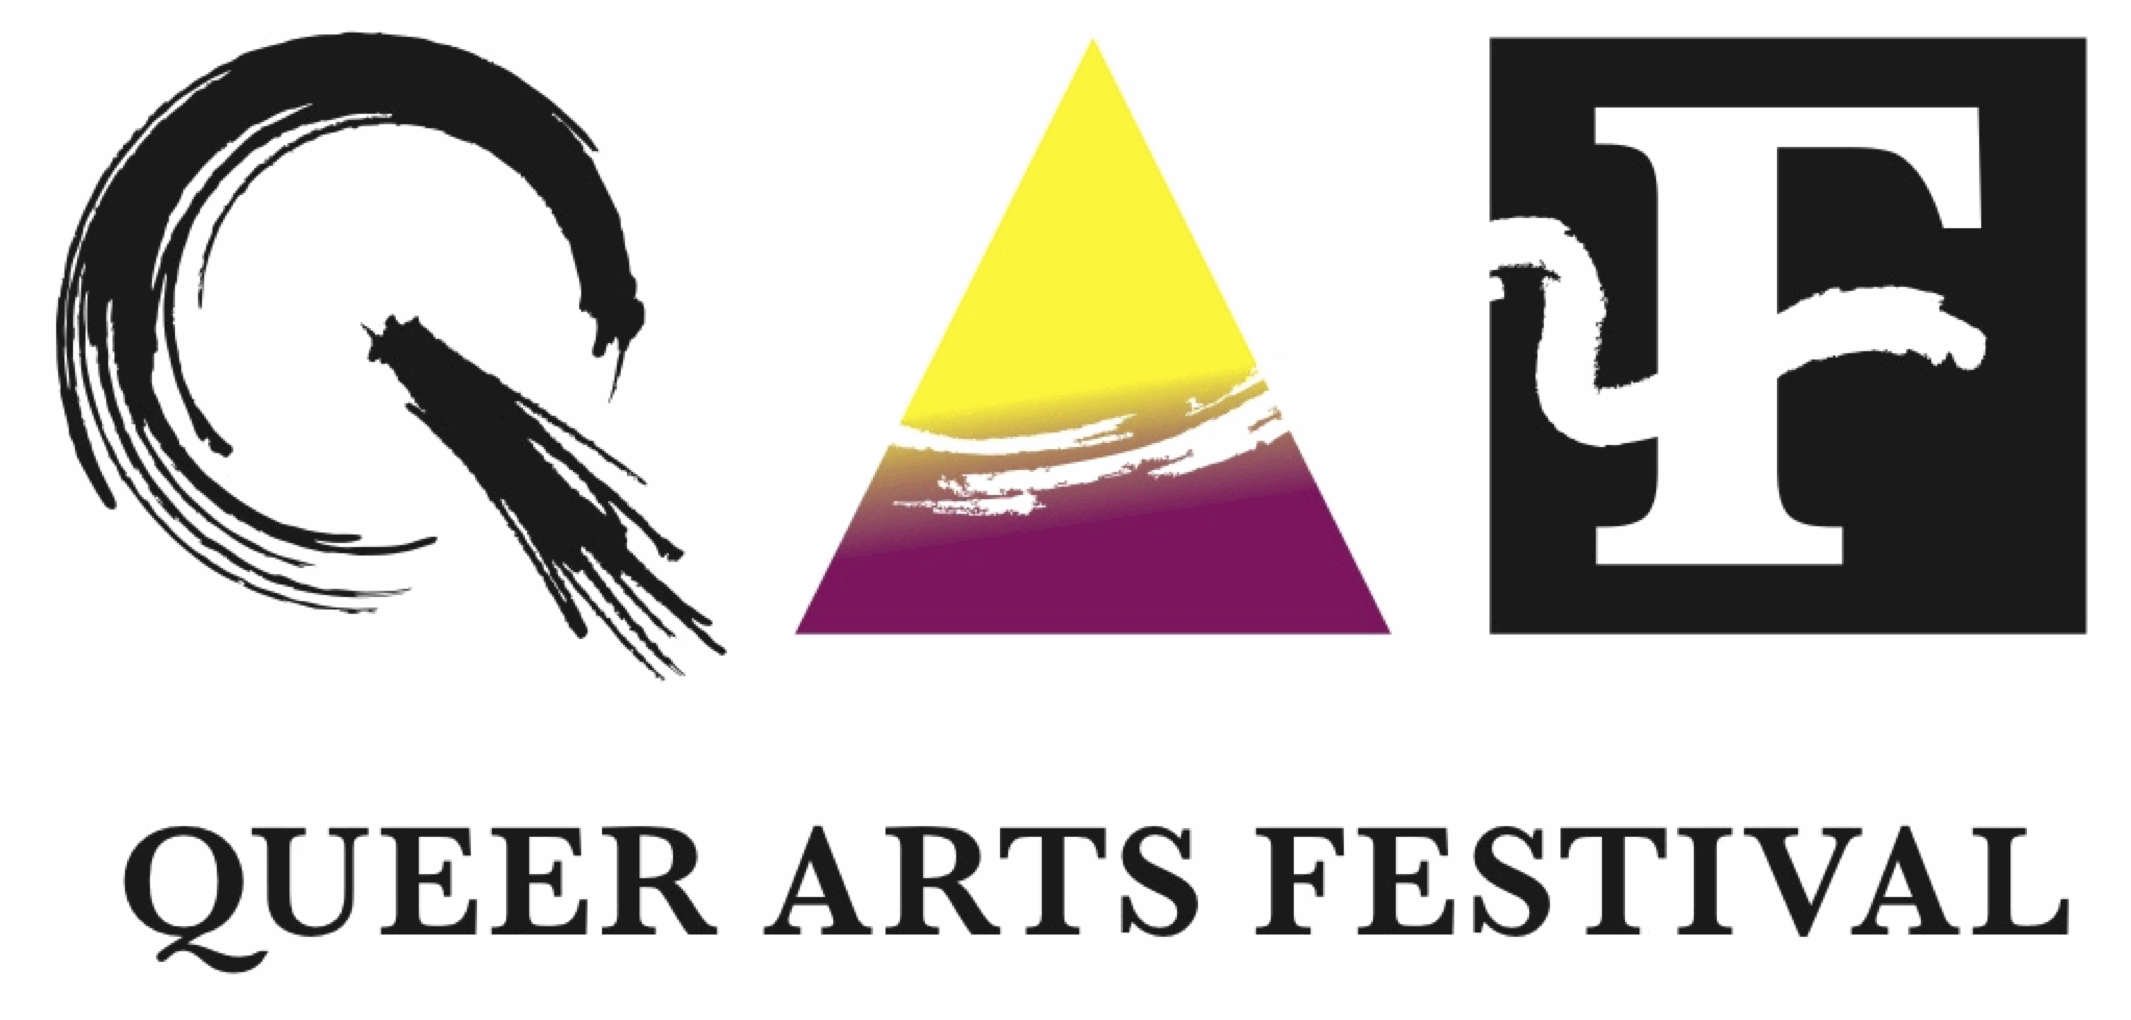 Queer Arts Festival